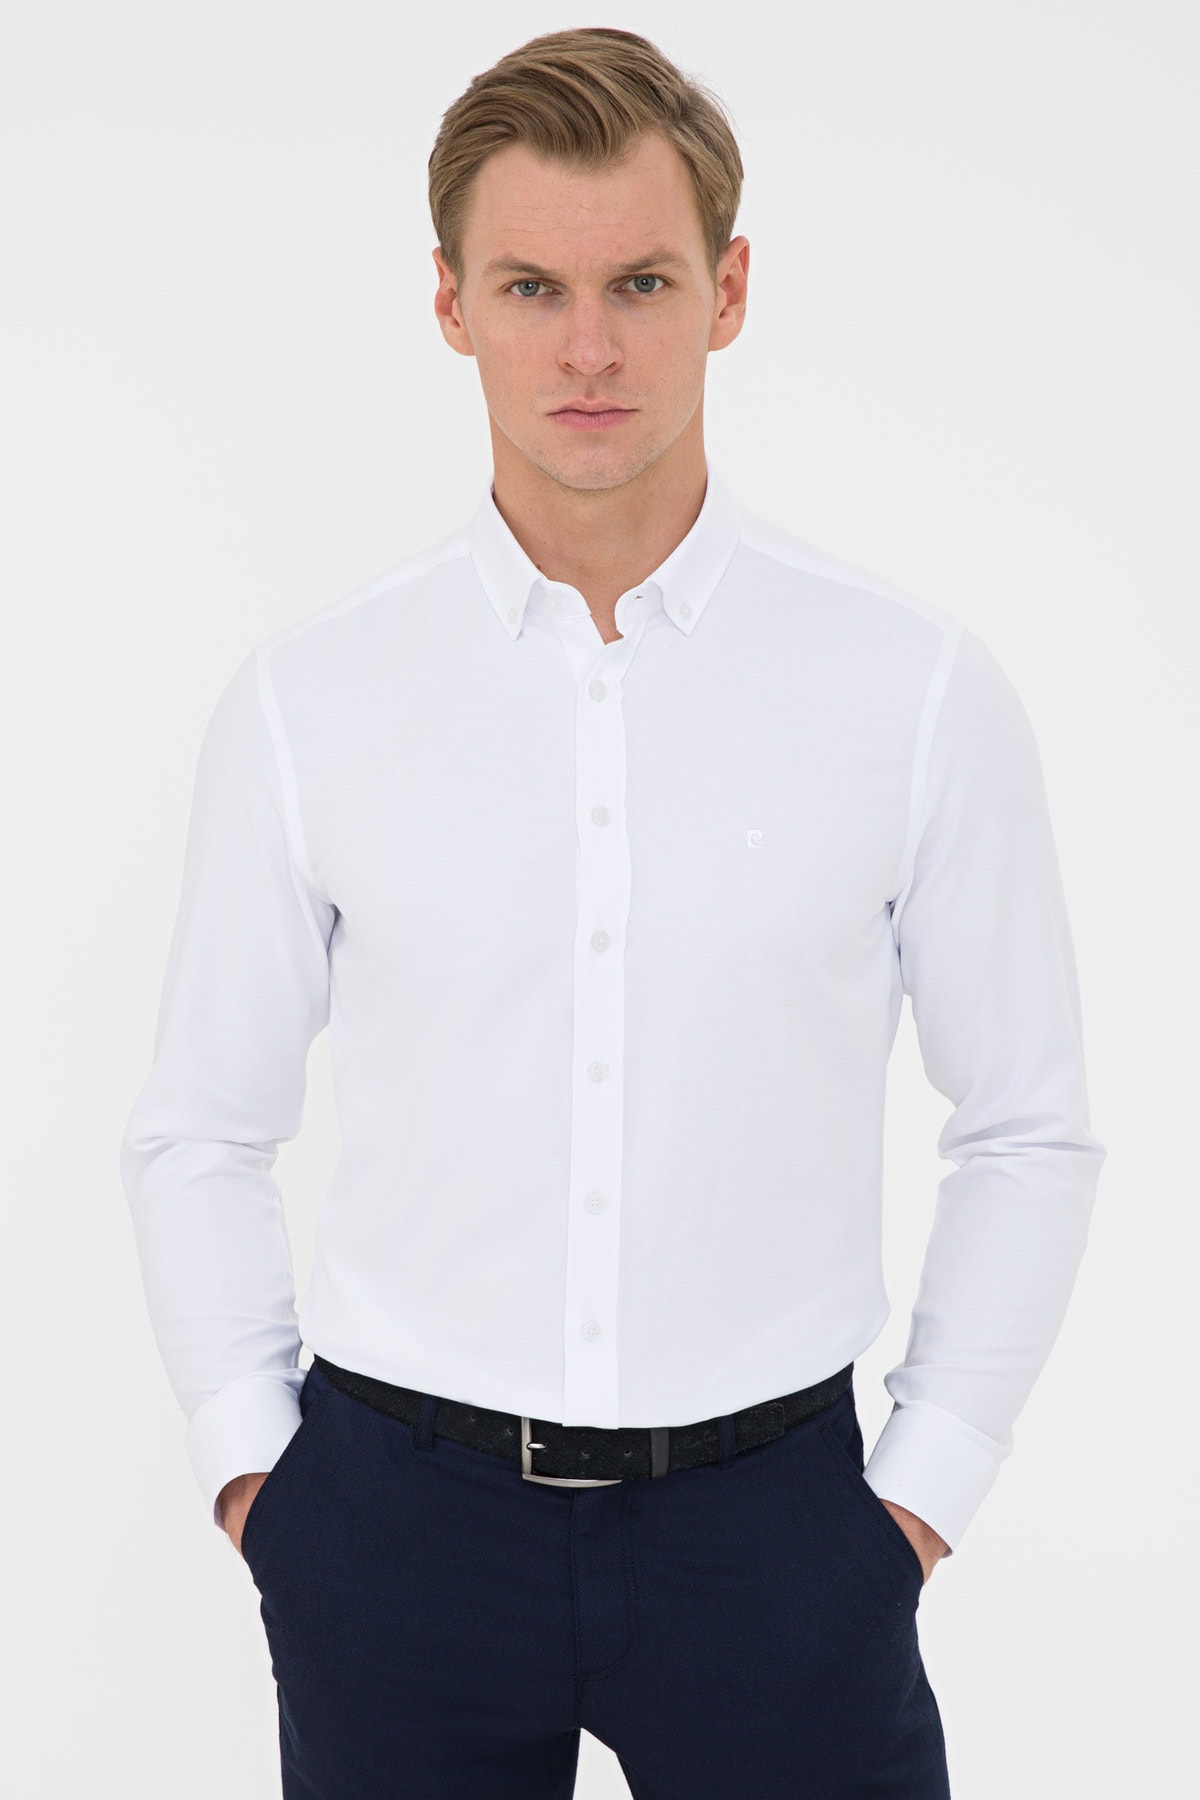 Pierre Cardin Beyaz Slim Fit Oxford Gömlek